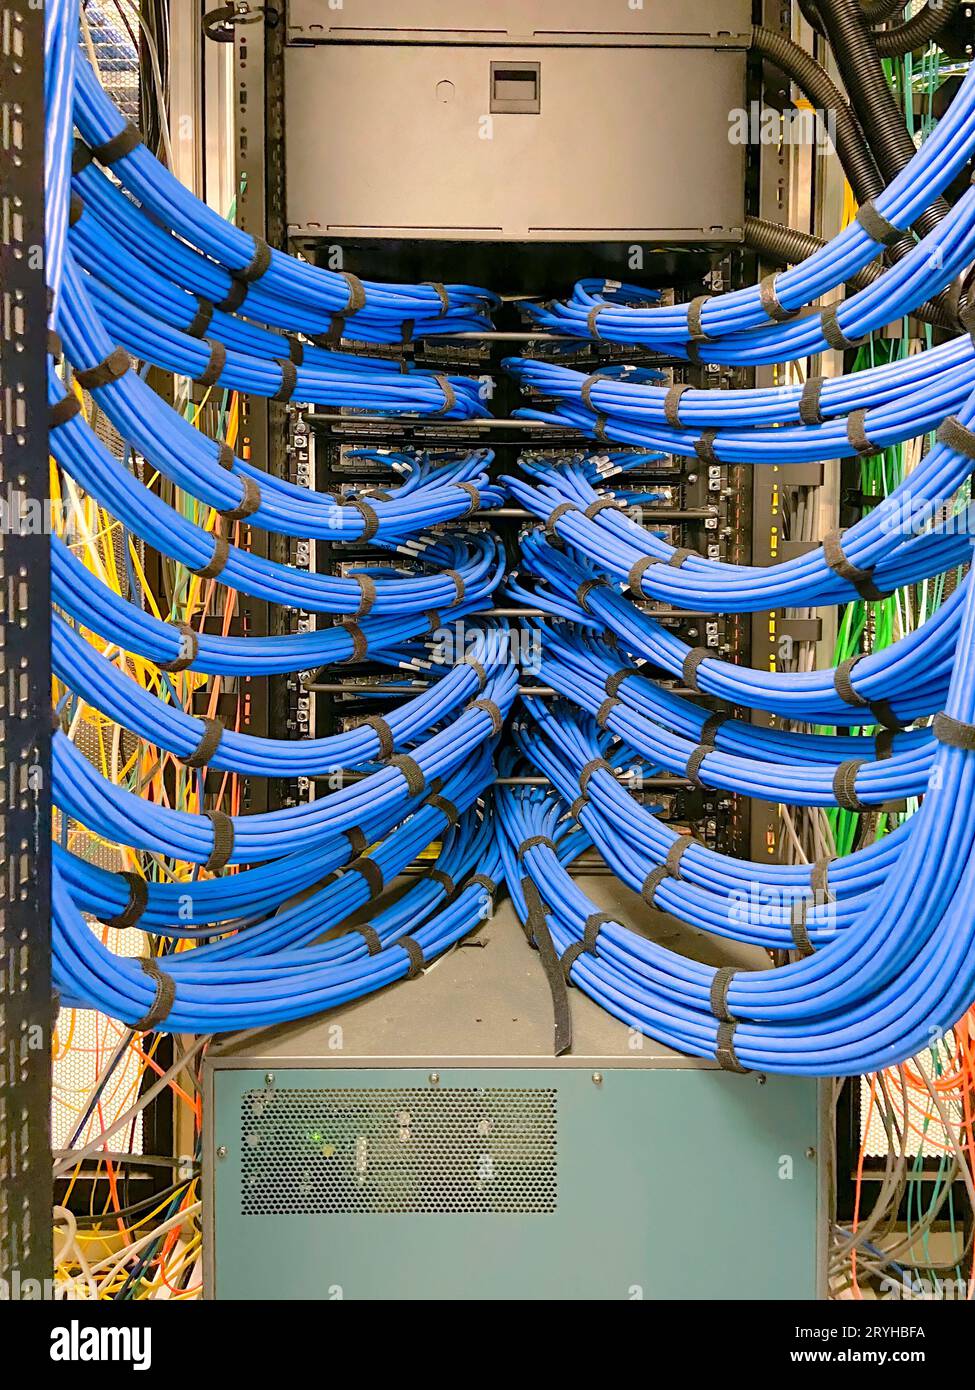 Infrastruttura di cavi in rame montata in un rack per apparecchiature IT Foto Stock